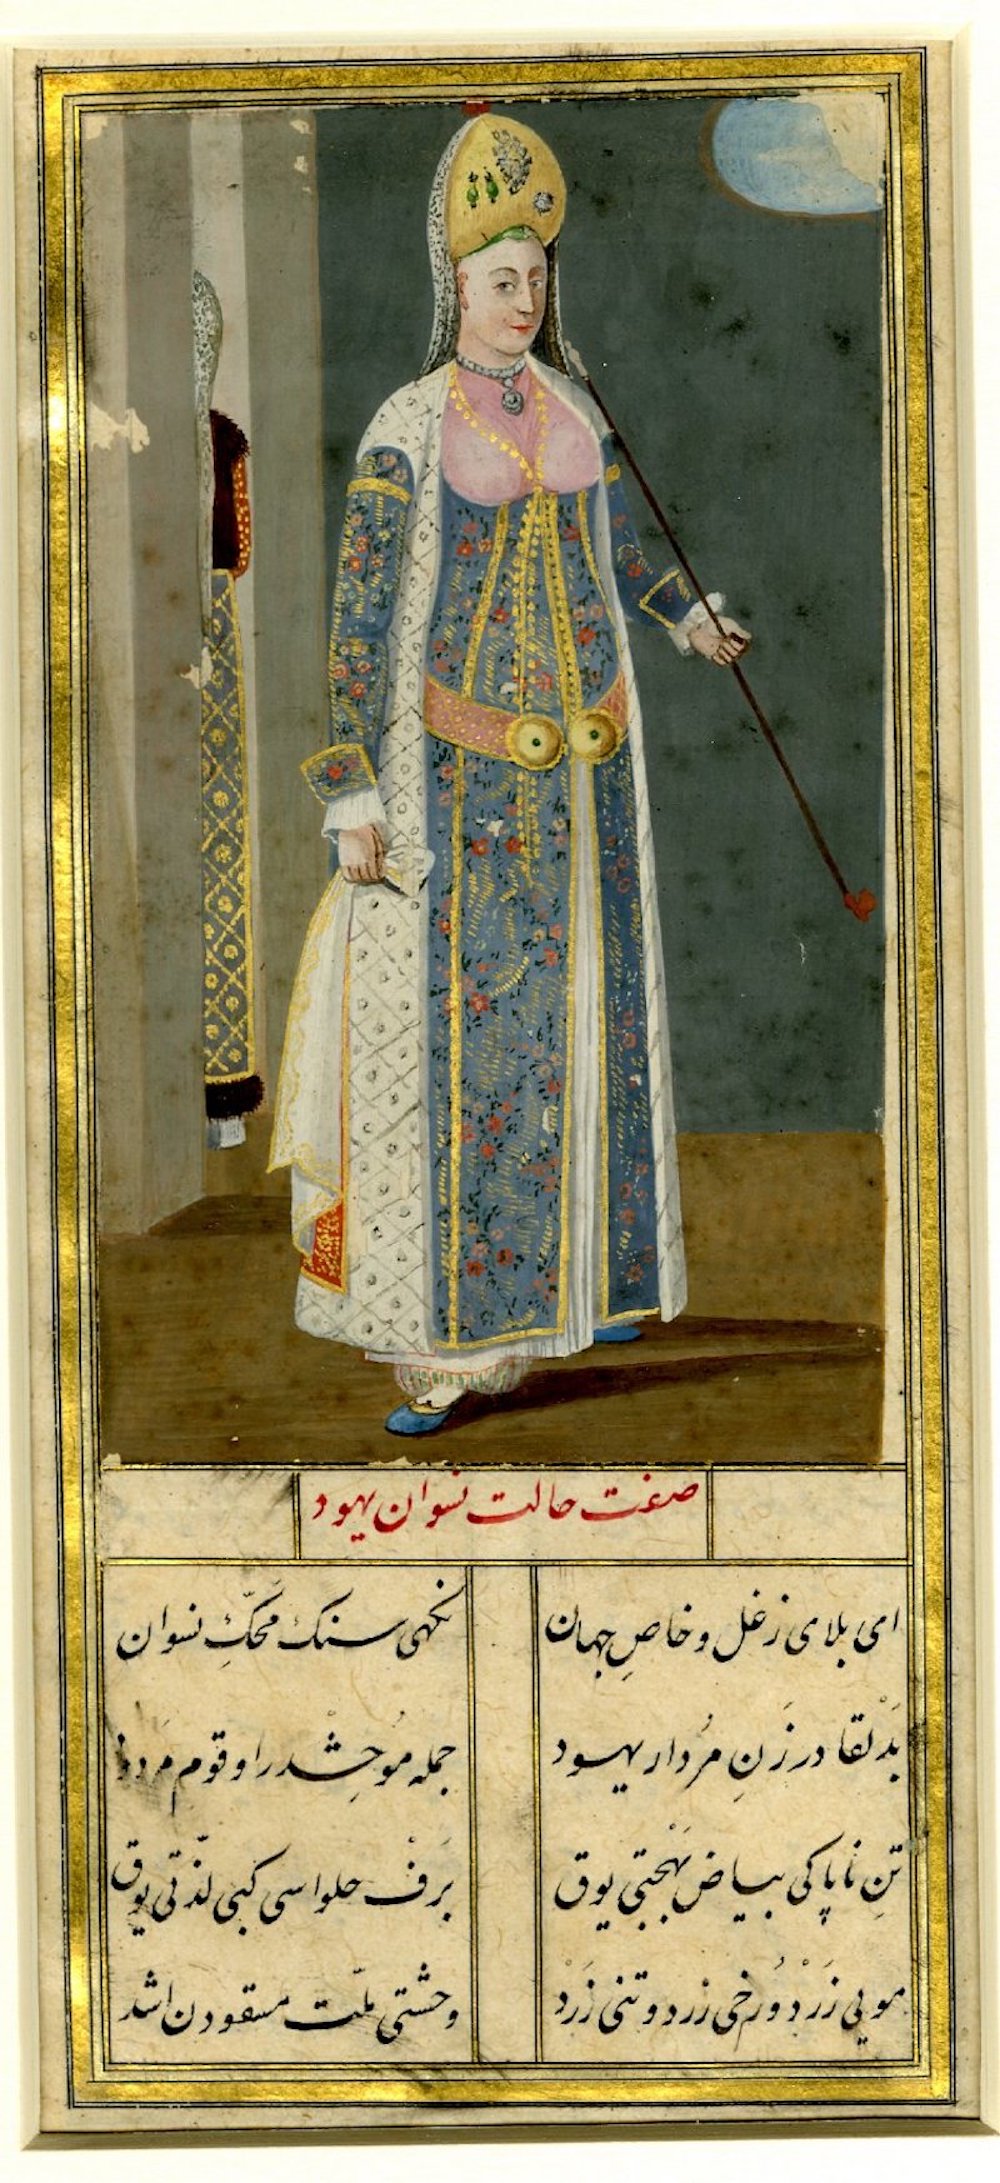 Ottoman costumes